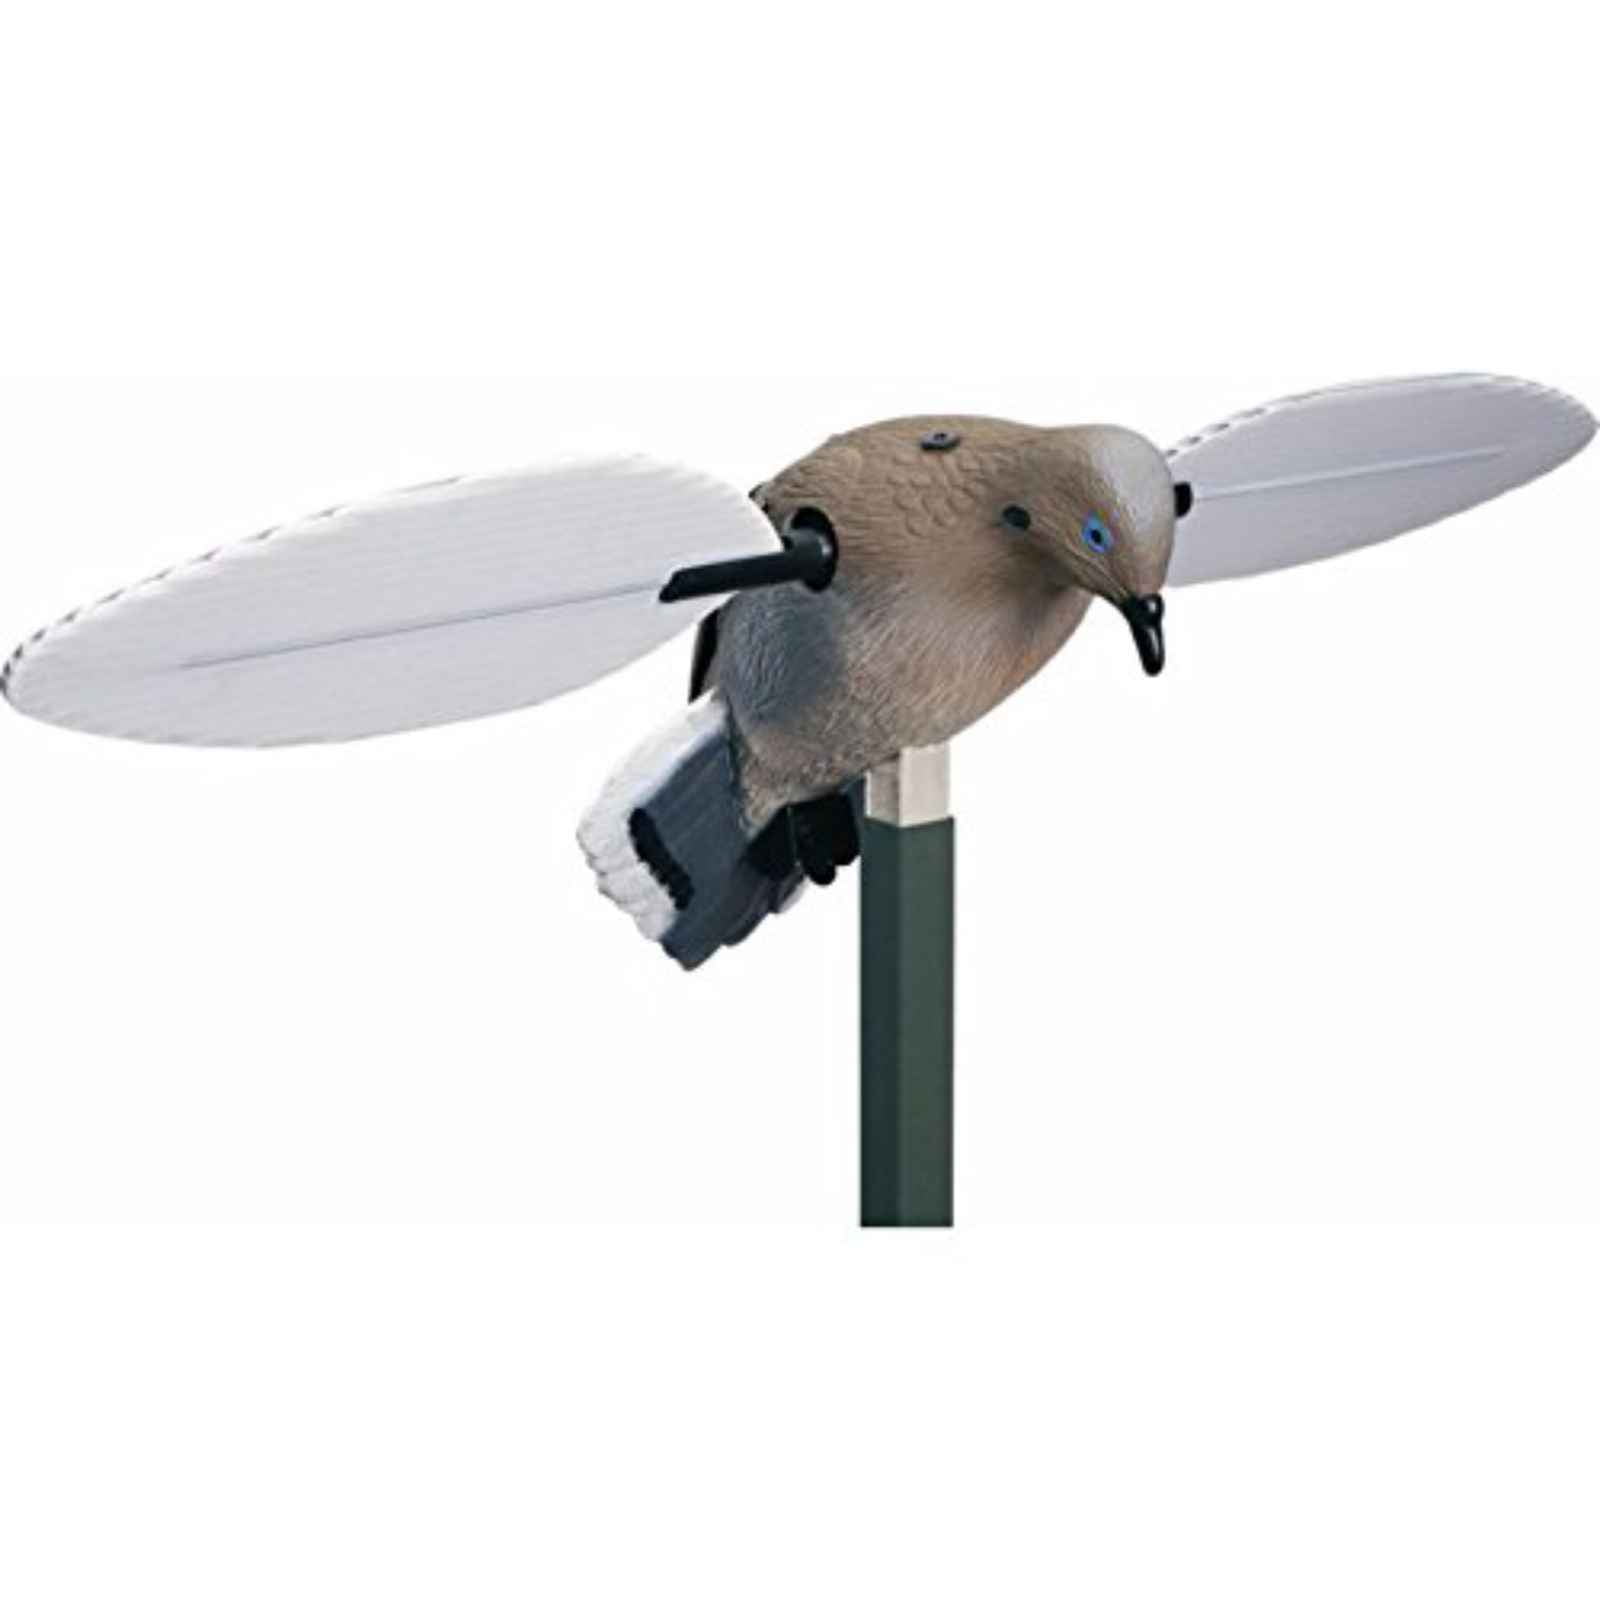 1 Dozen Realistic Hollow Pigeon Decoy Dove Decoys for Garden Decorative/Hunting